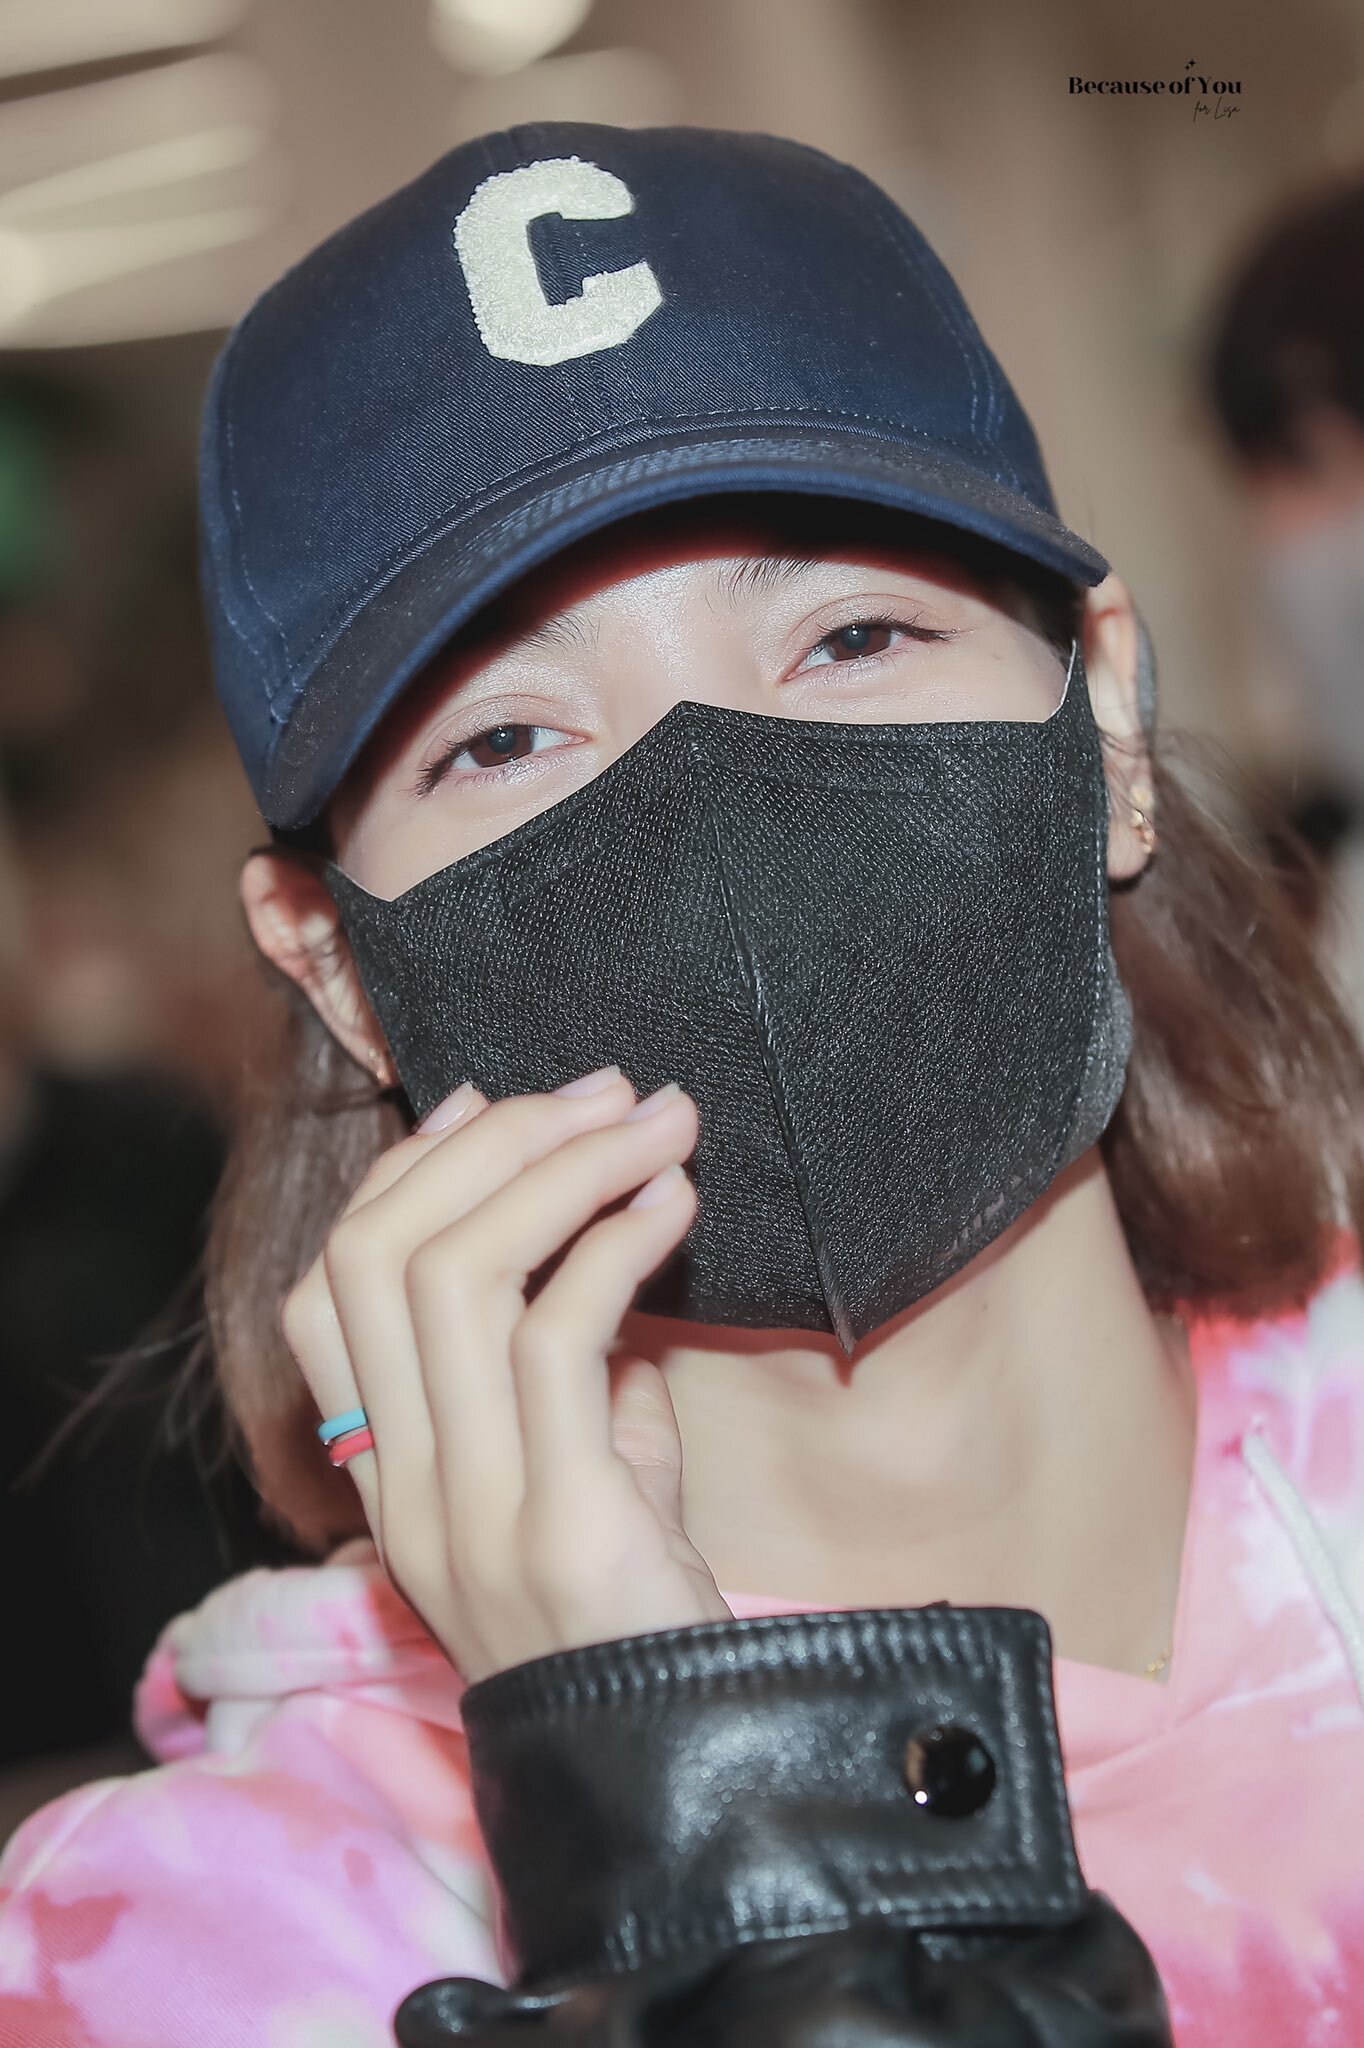 211018 BLACKPINK Lisa at Incheon International Airport